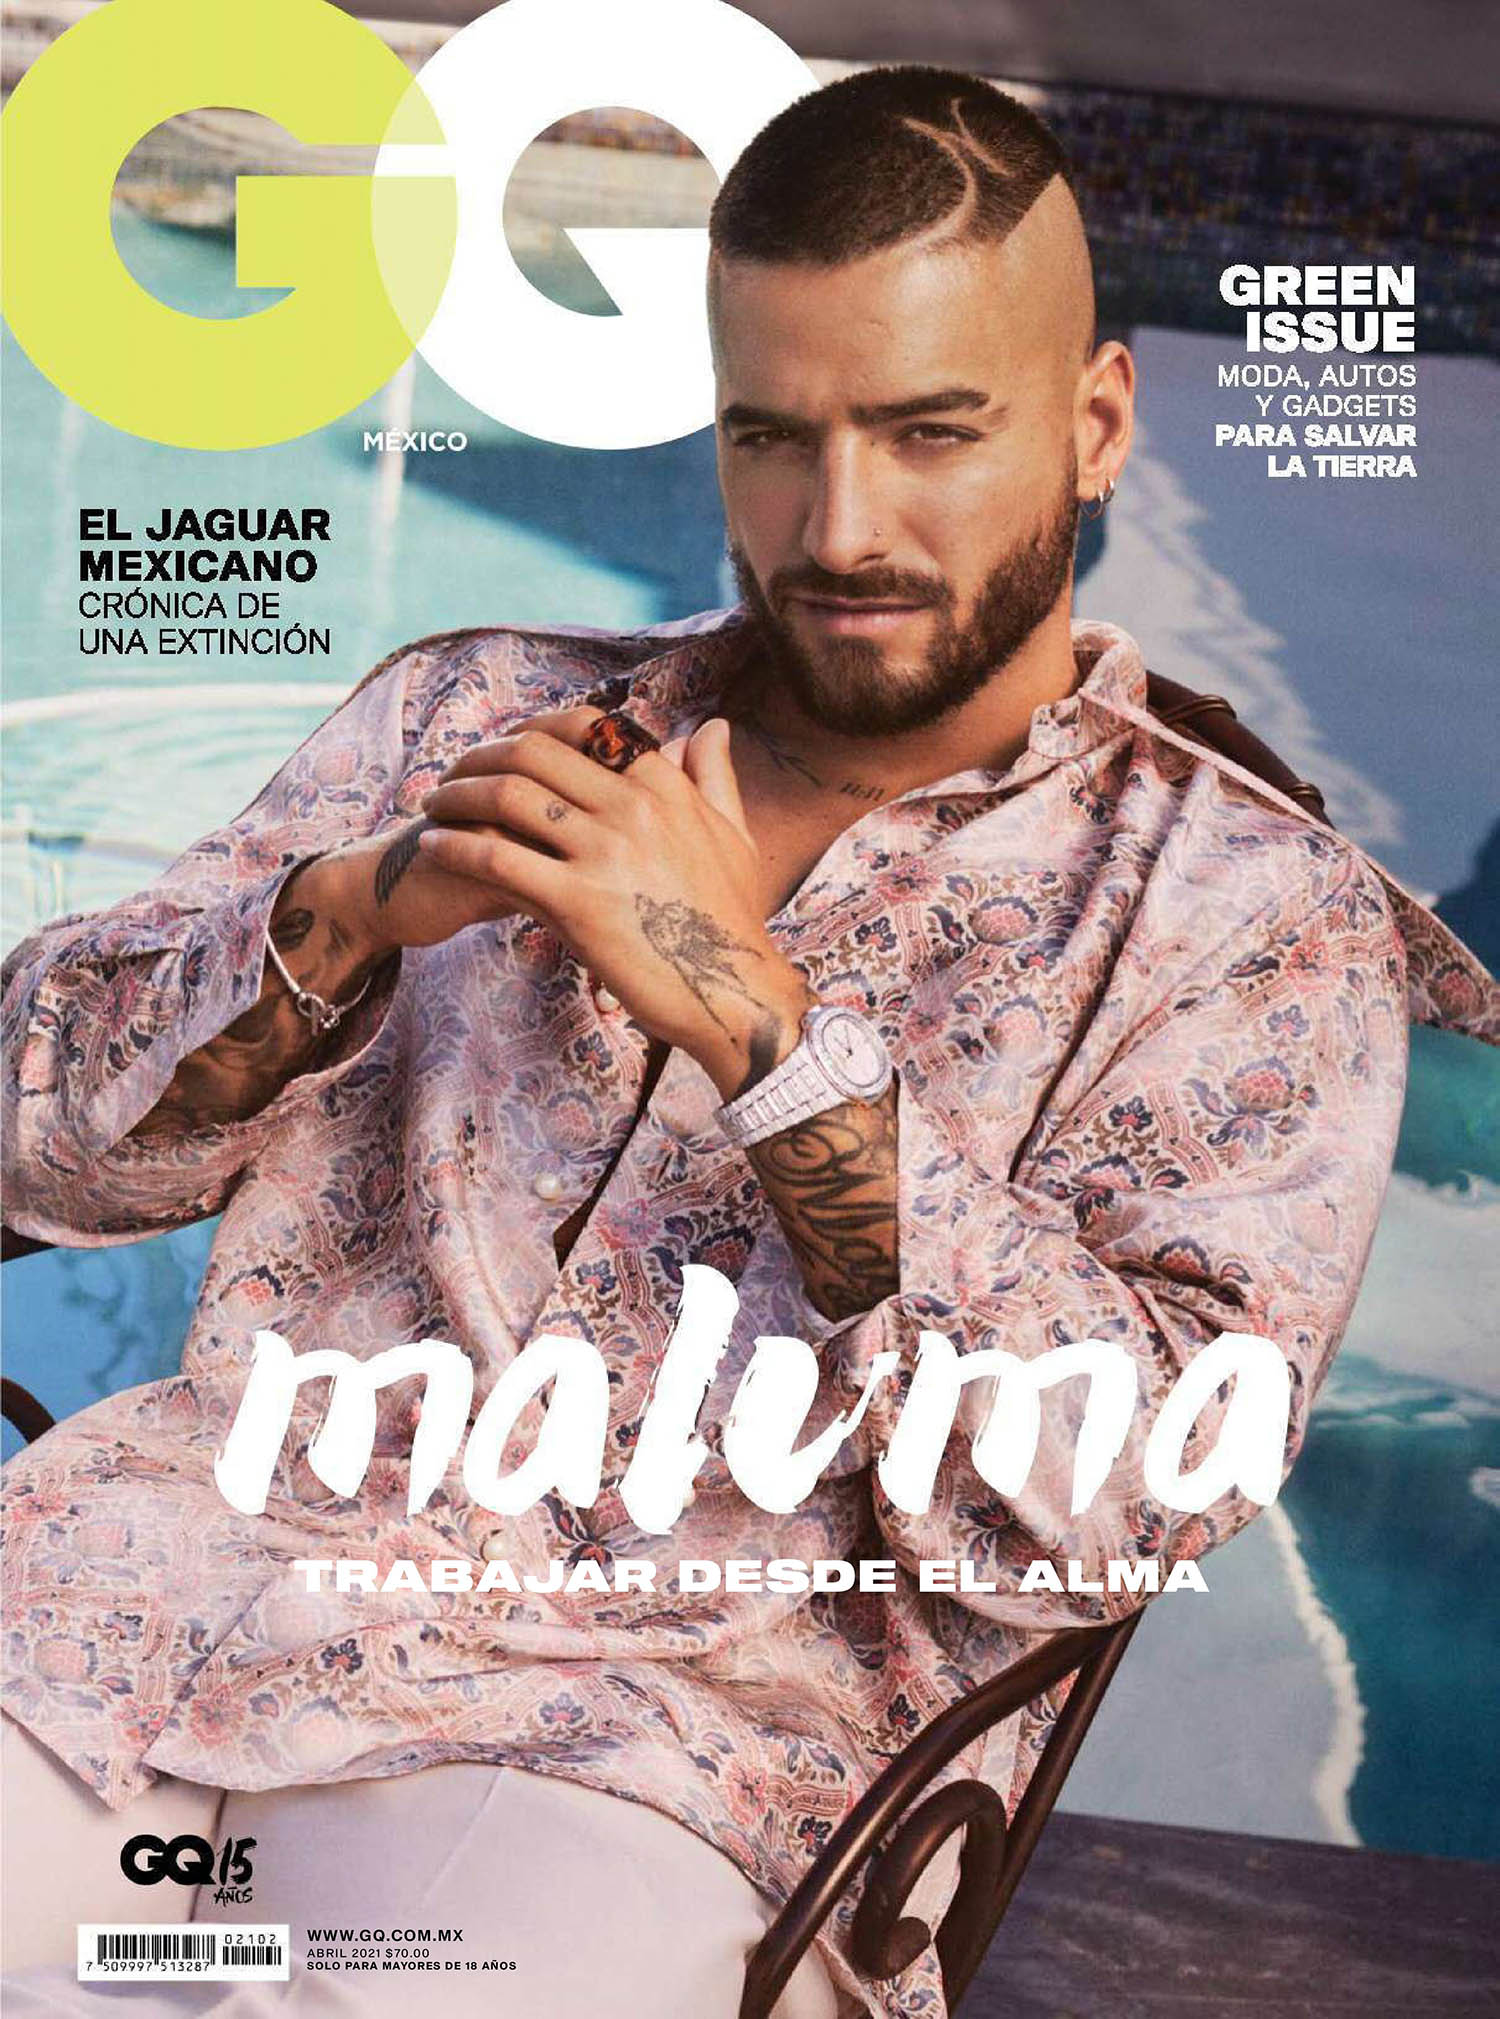 Maluma Covers L'OFFICIEL Hommes' 100th Anniversary Issue — Maluma